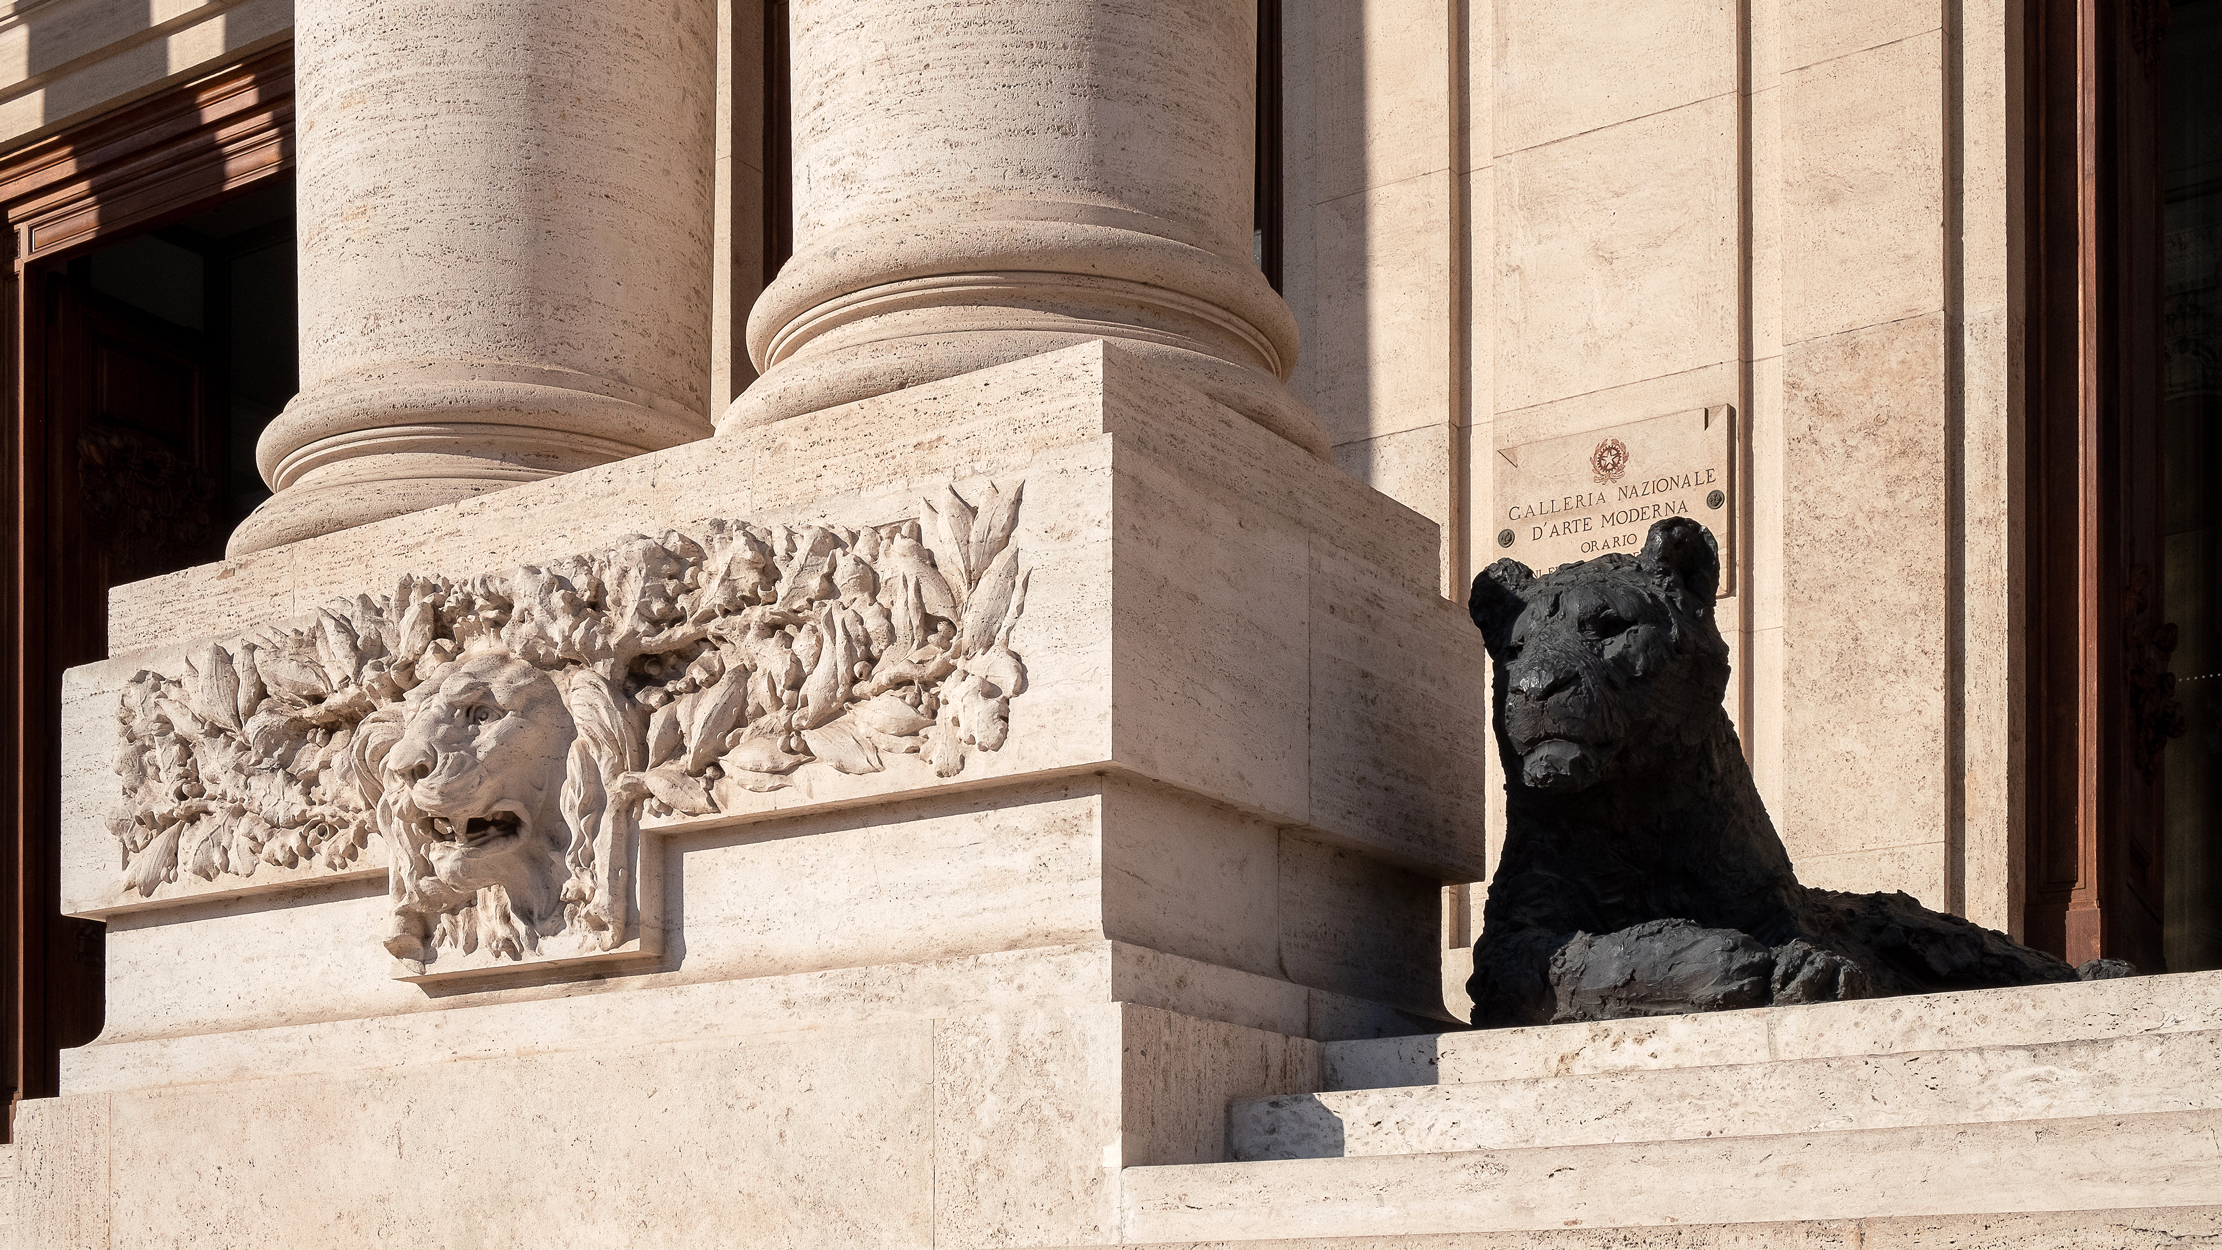 Hic sunt leones: alla Galleria Nazionale